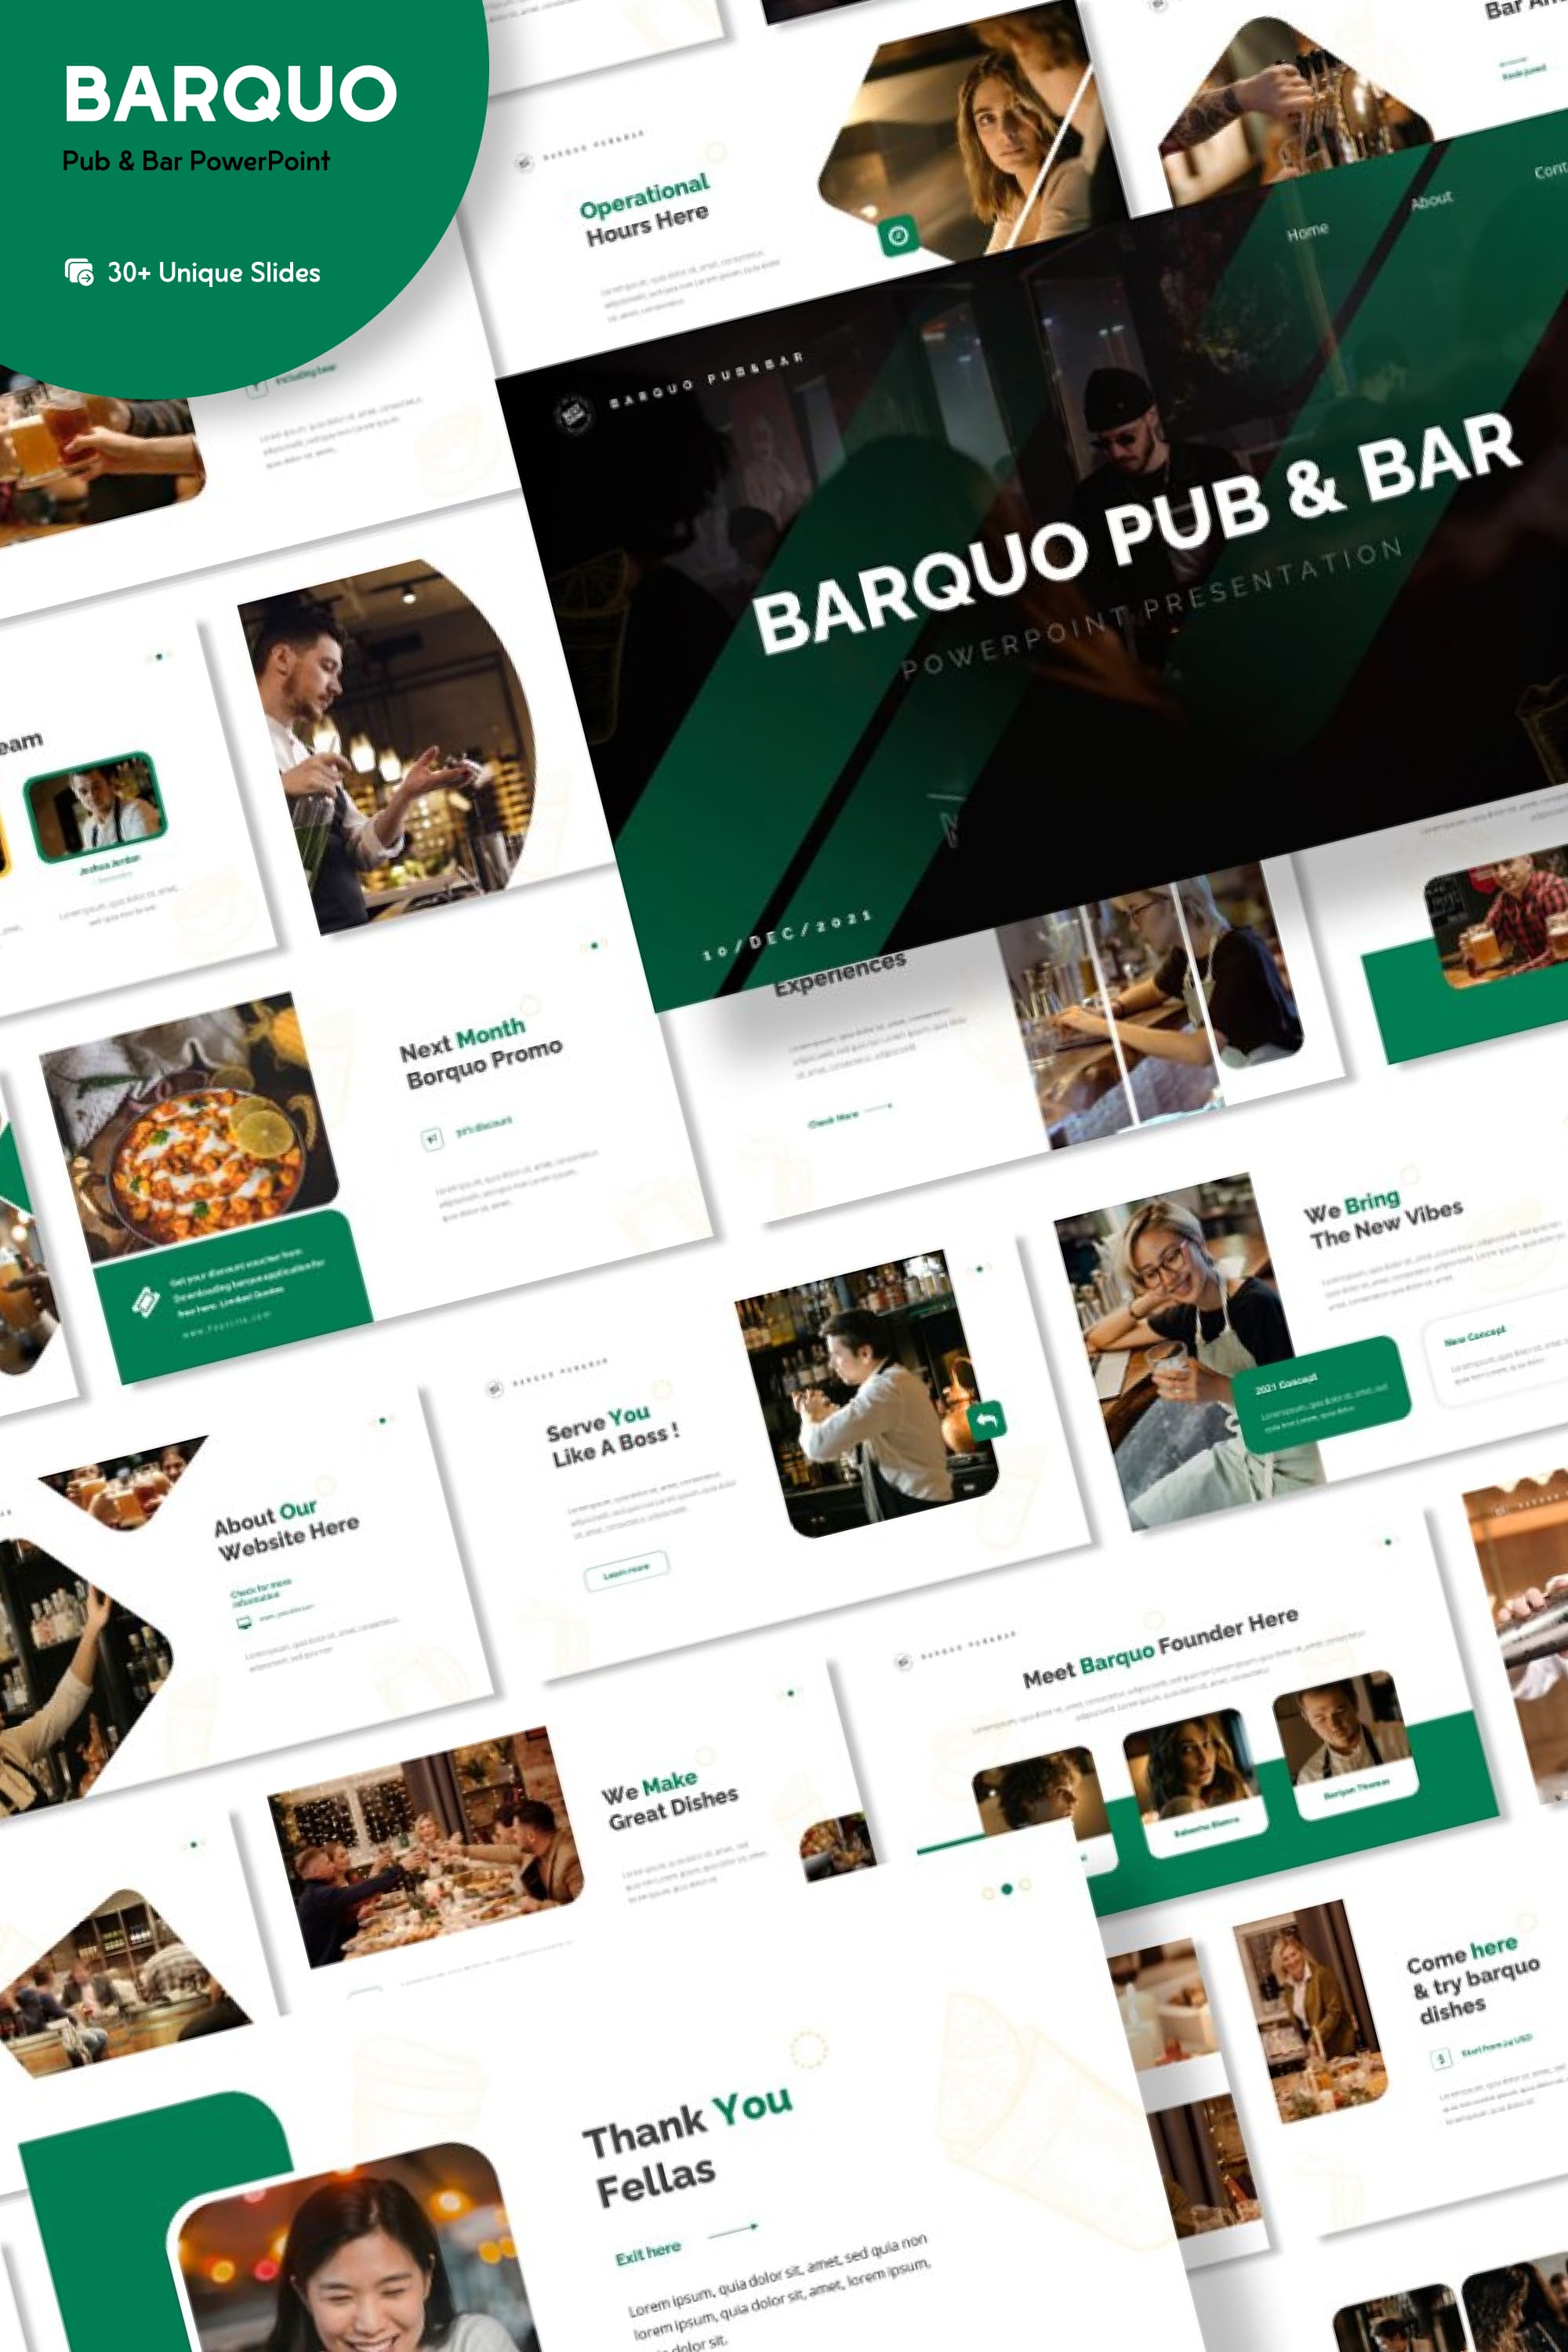 barquo – pub bar powerpoint pinterest